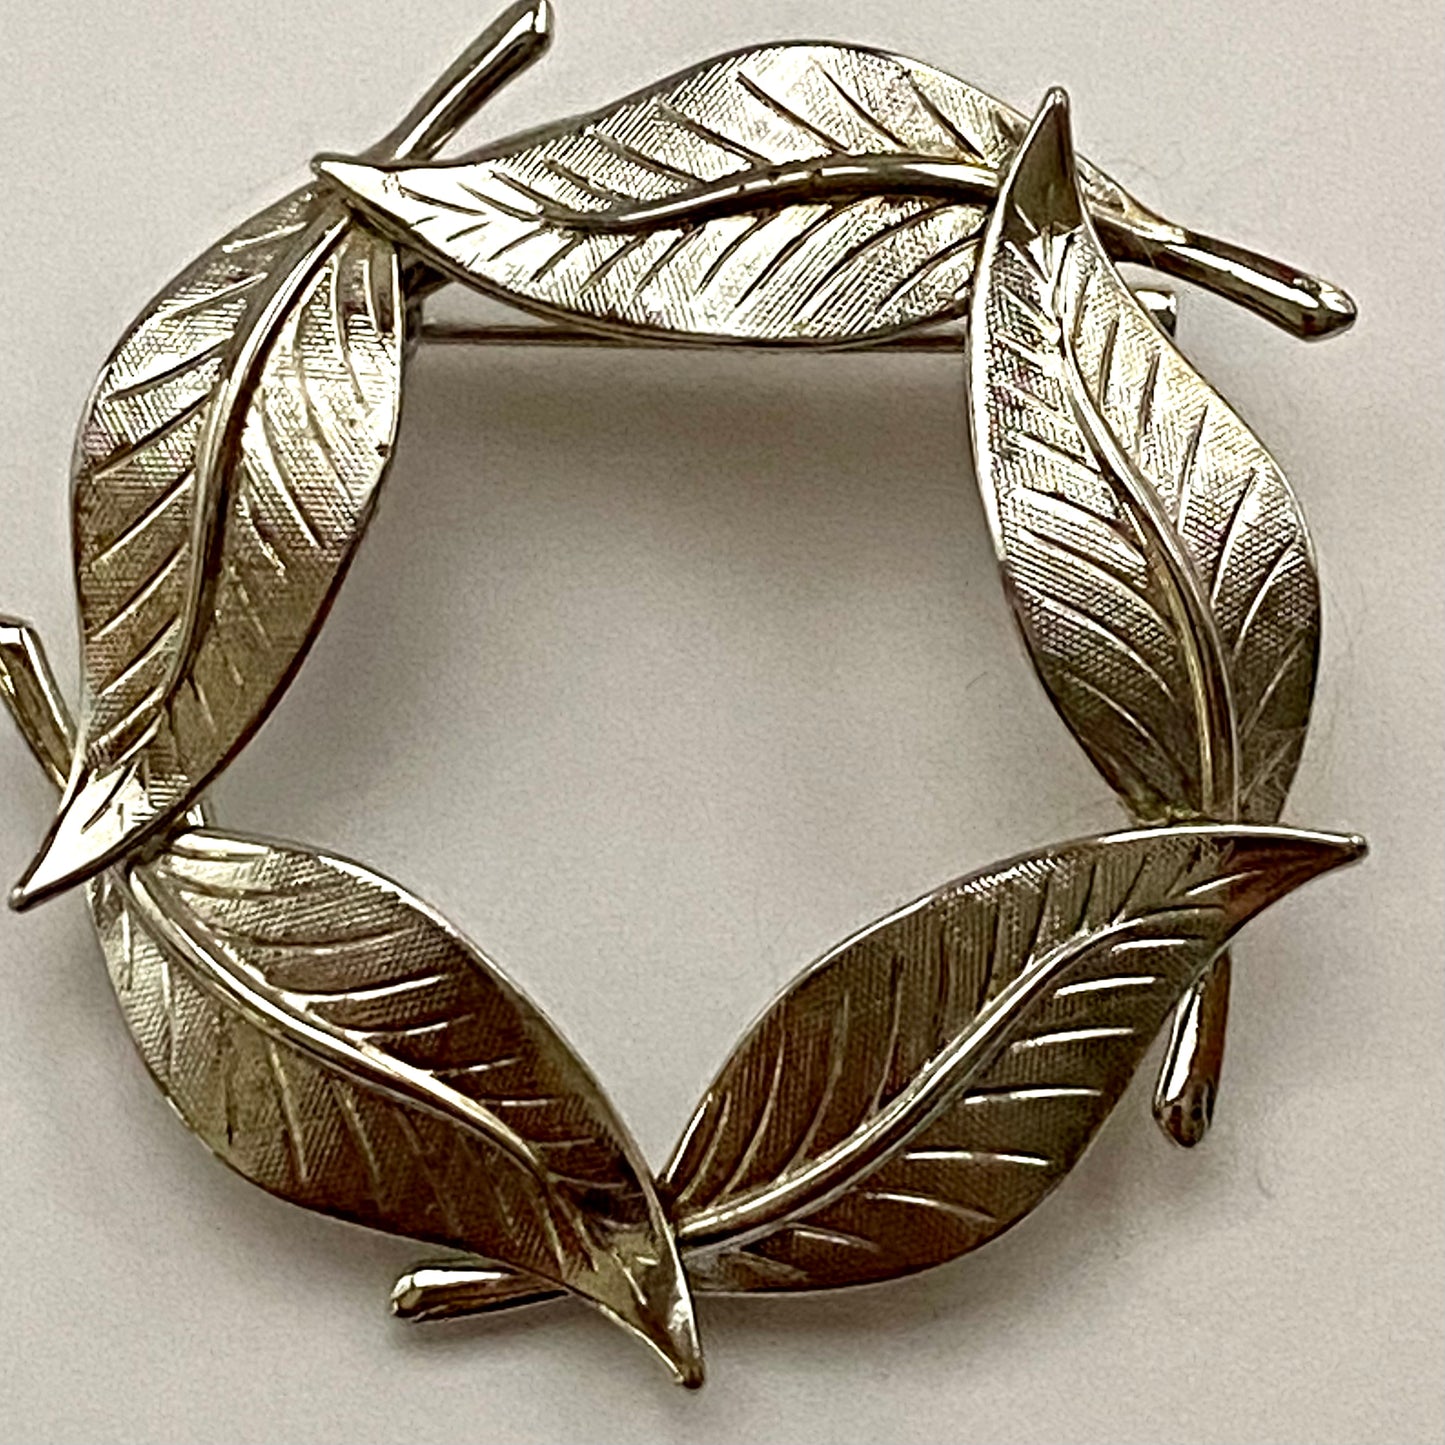 1960s Silver-Tone Leaf Circle Pin